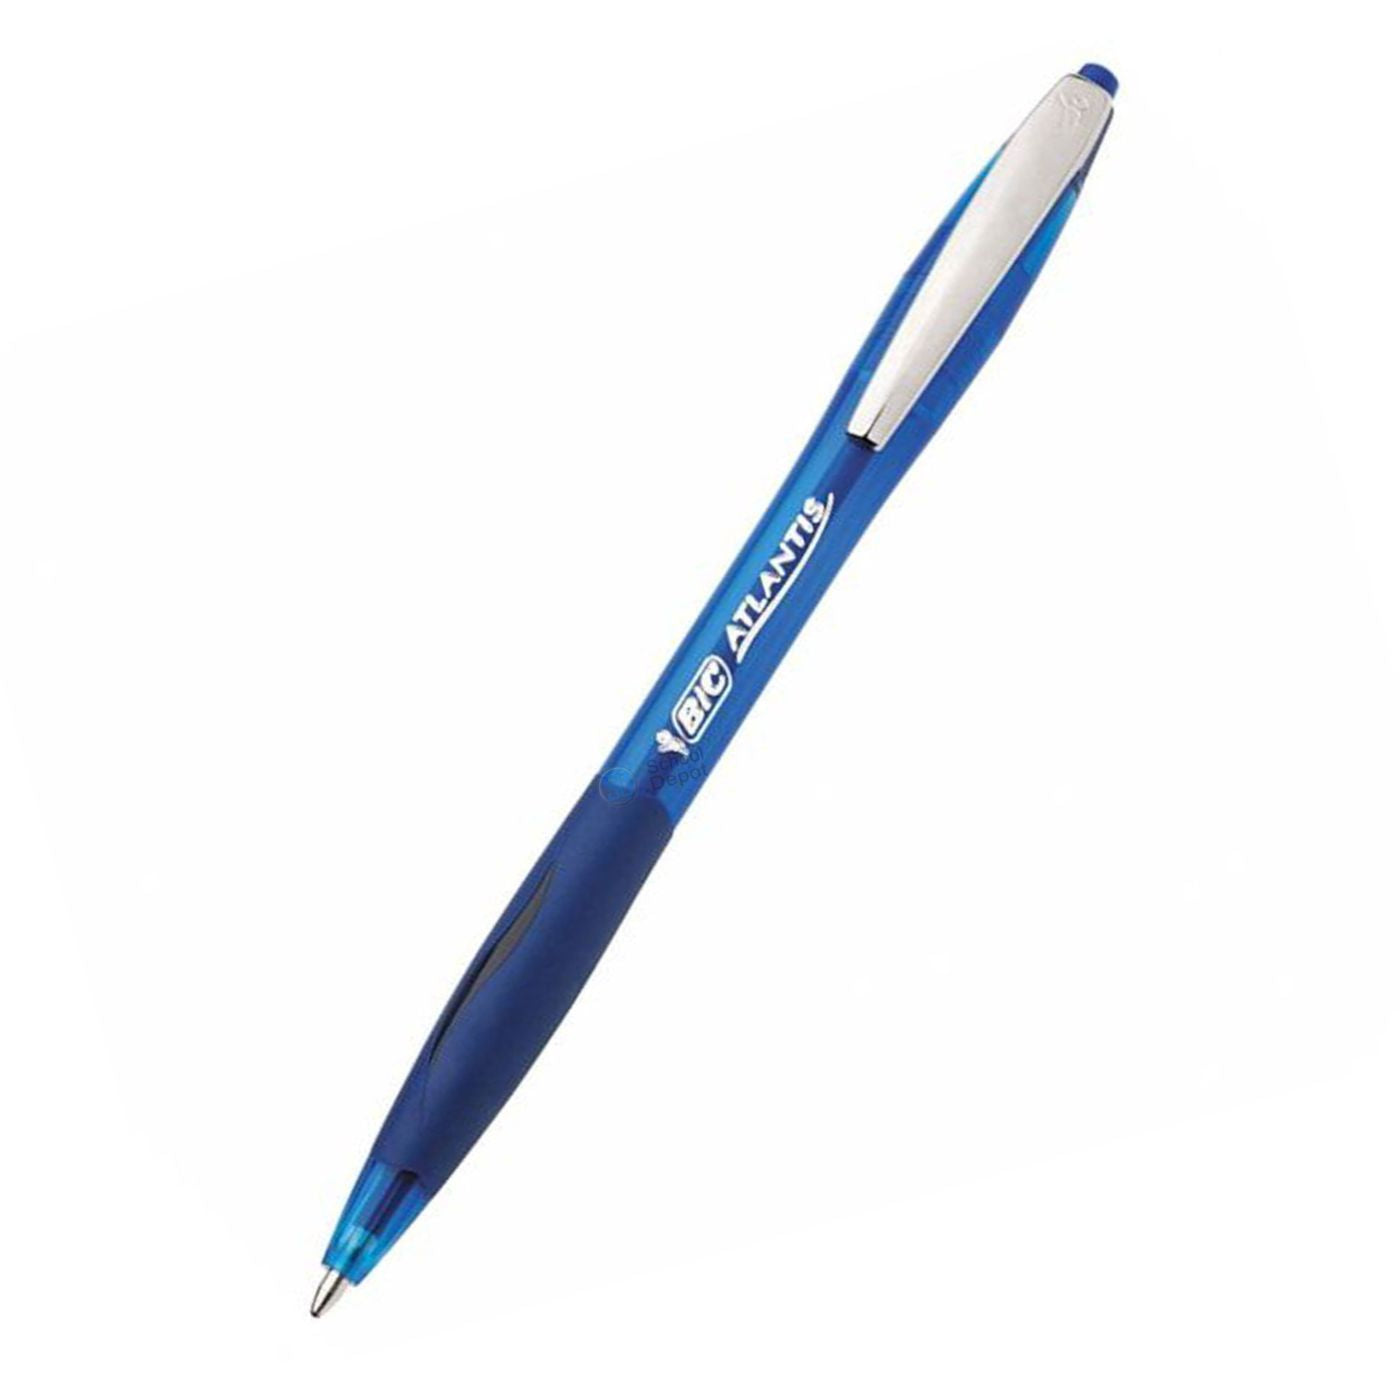 BIC Atlantis Ballpoint Pen Retractable Medium Tip Black